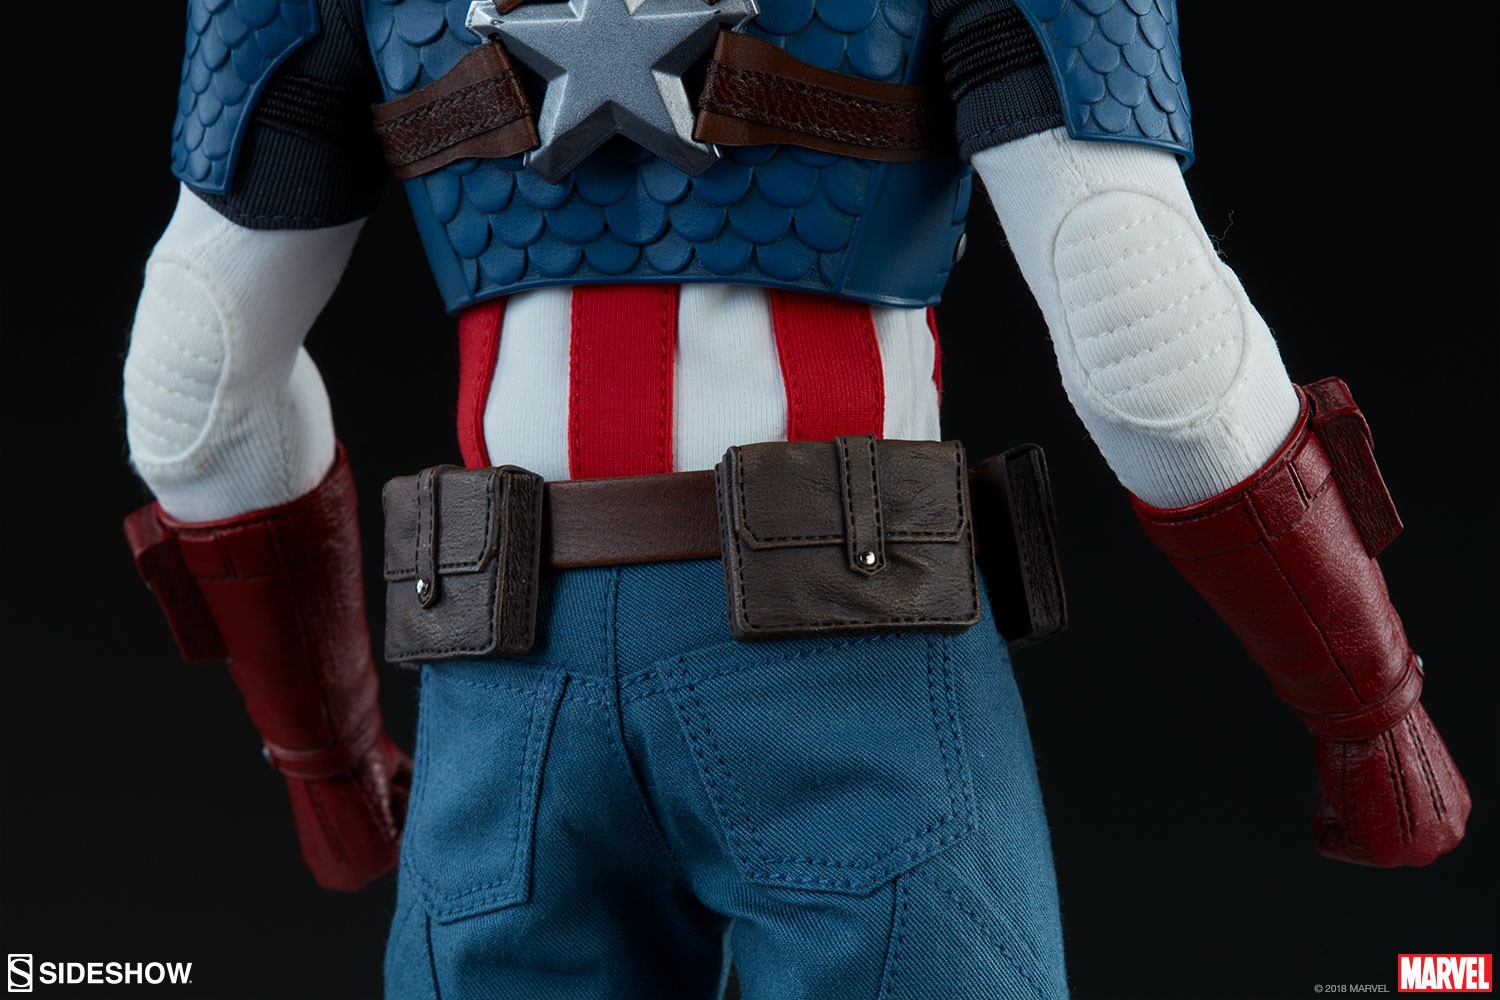 Captain America Exclusive Edition (Prototype Shown) View 8